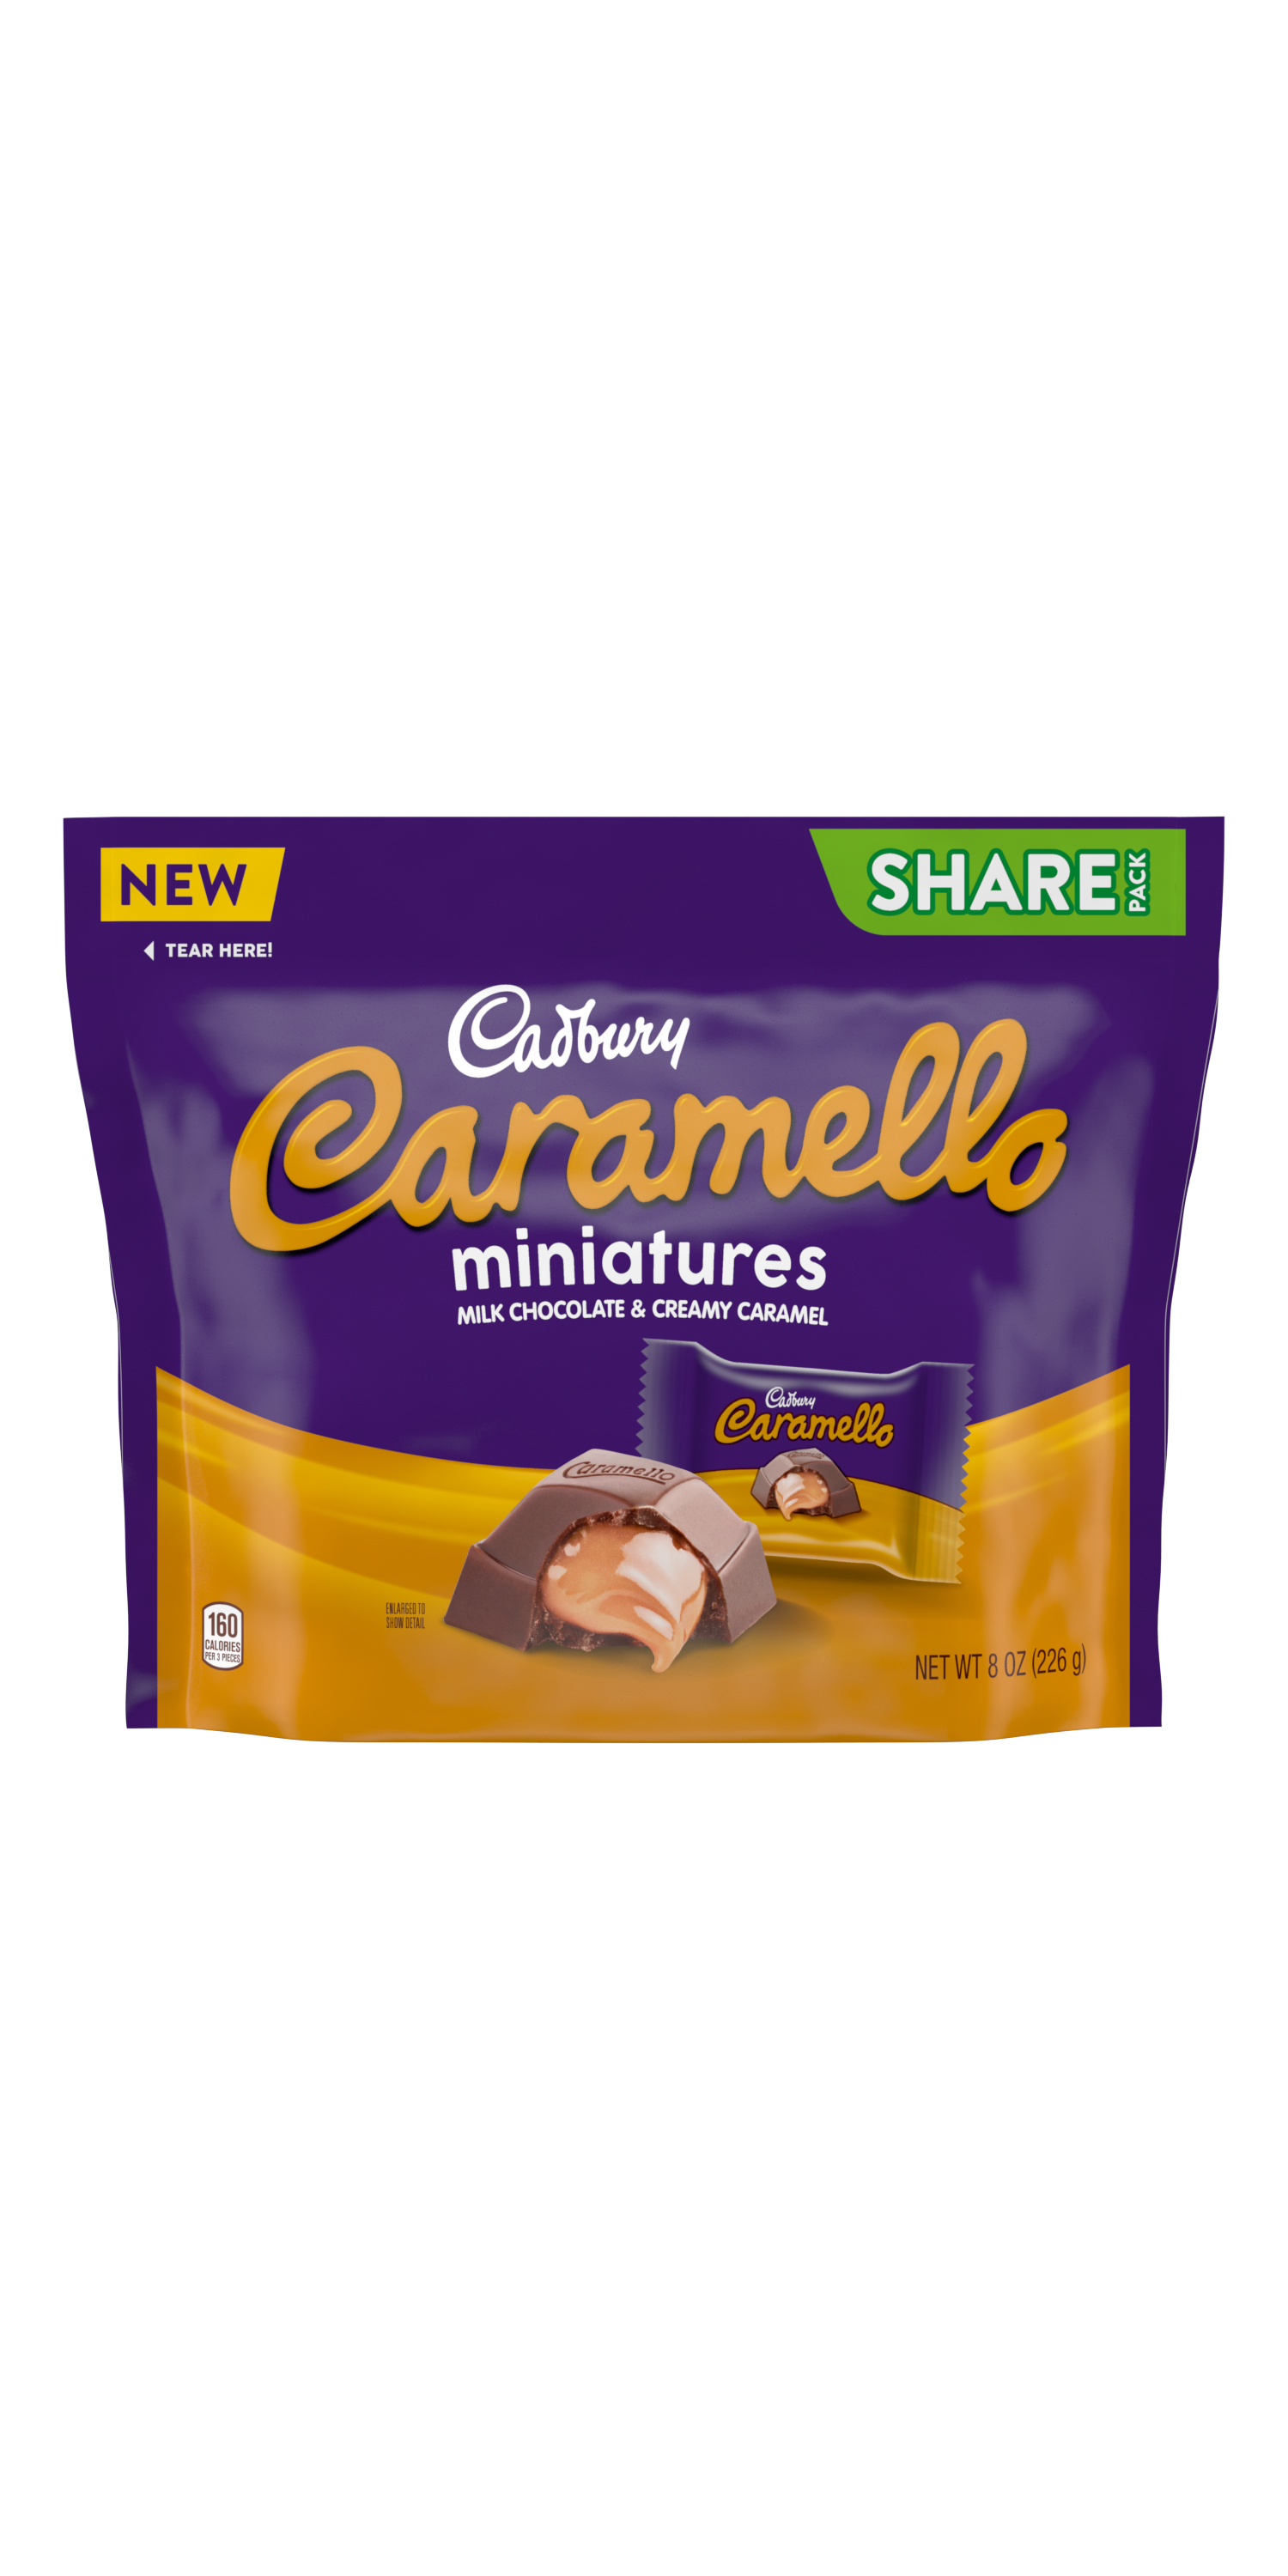 CADBURY CARAMELLO Miniatures Milk Chocolate & Creamy Caramel Candy, 8 oz pack - Front of Package 